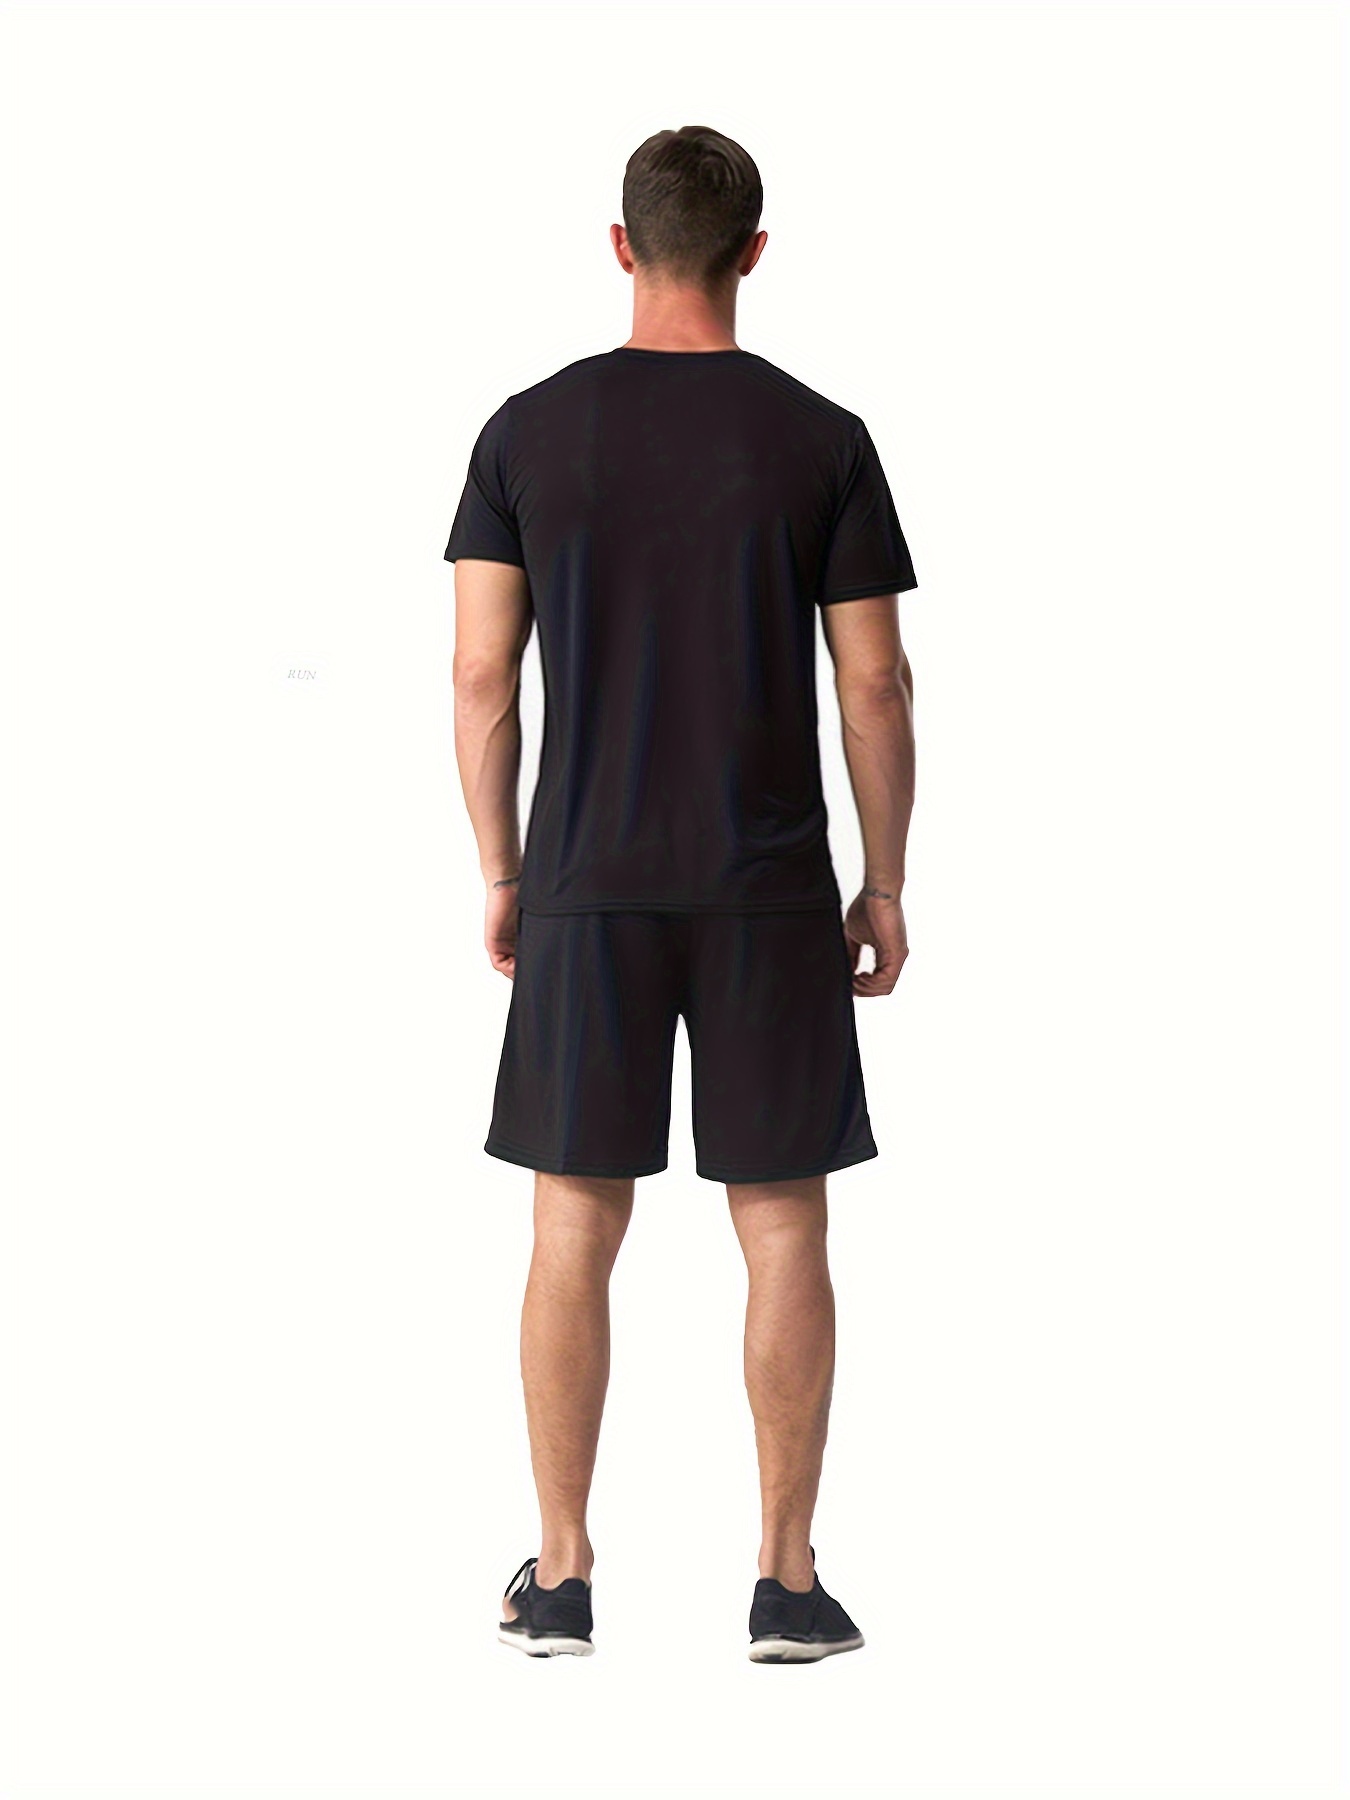 Ice Silk Quick Dry Men's Sports & Fitness T Shirt - Men's Fitness